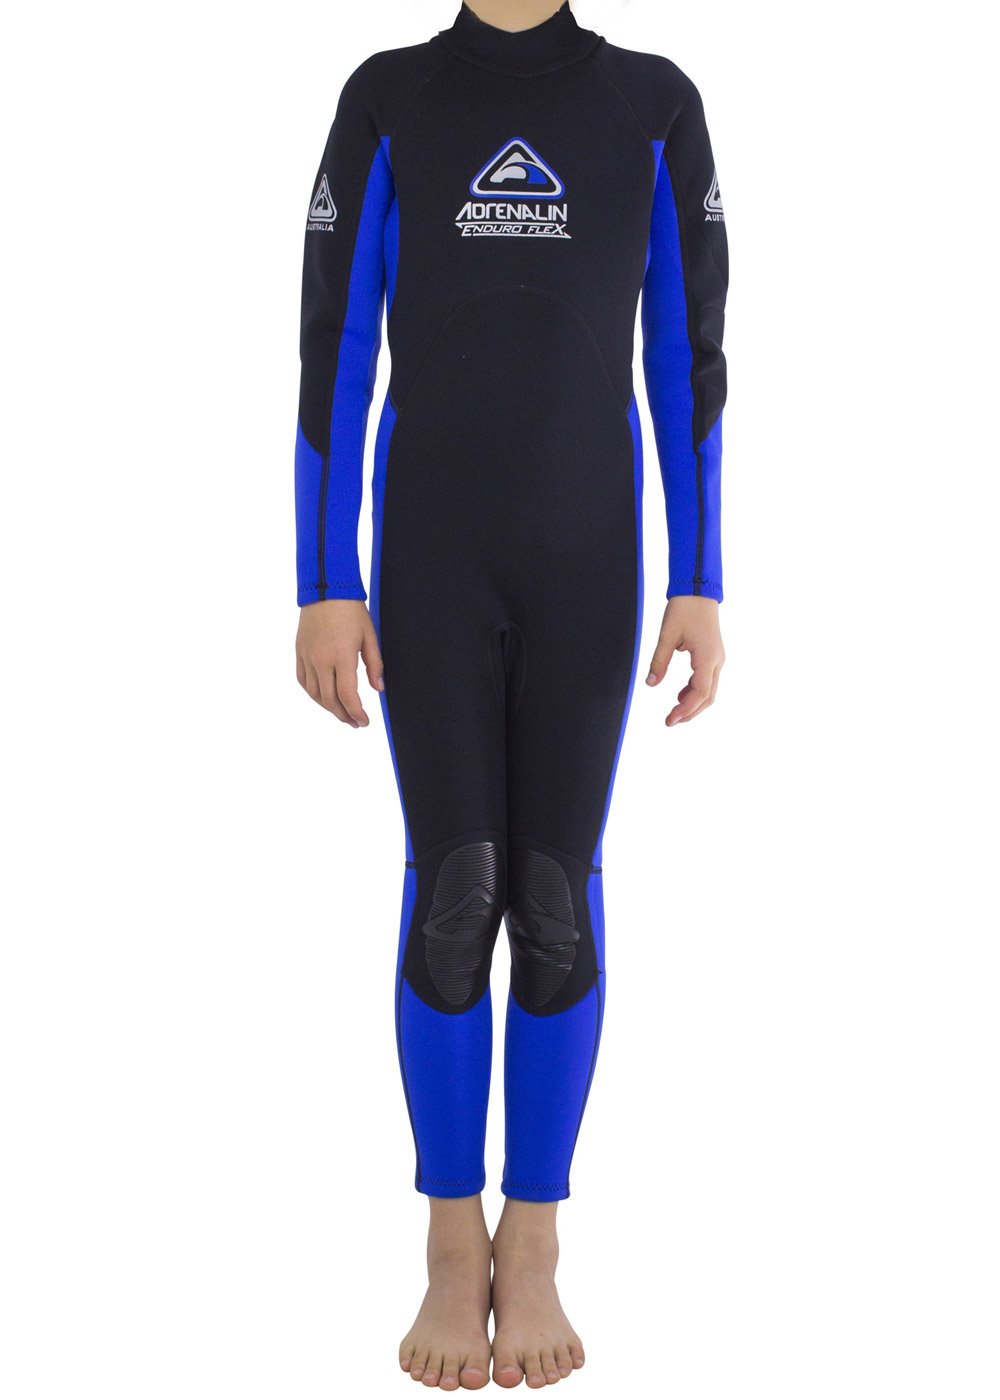 Adrenalin 'Enduro X' 3/2mm Steamer - Junior australia cheap outlet wetsuit